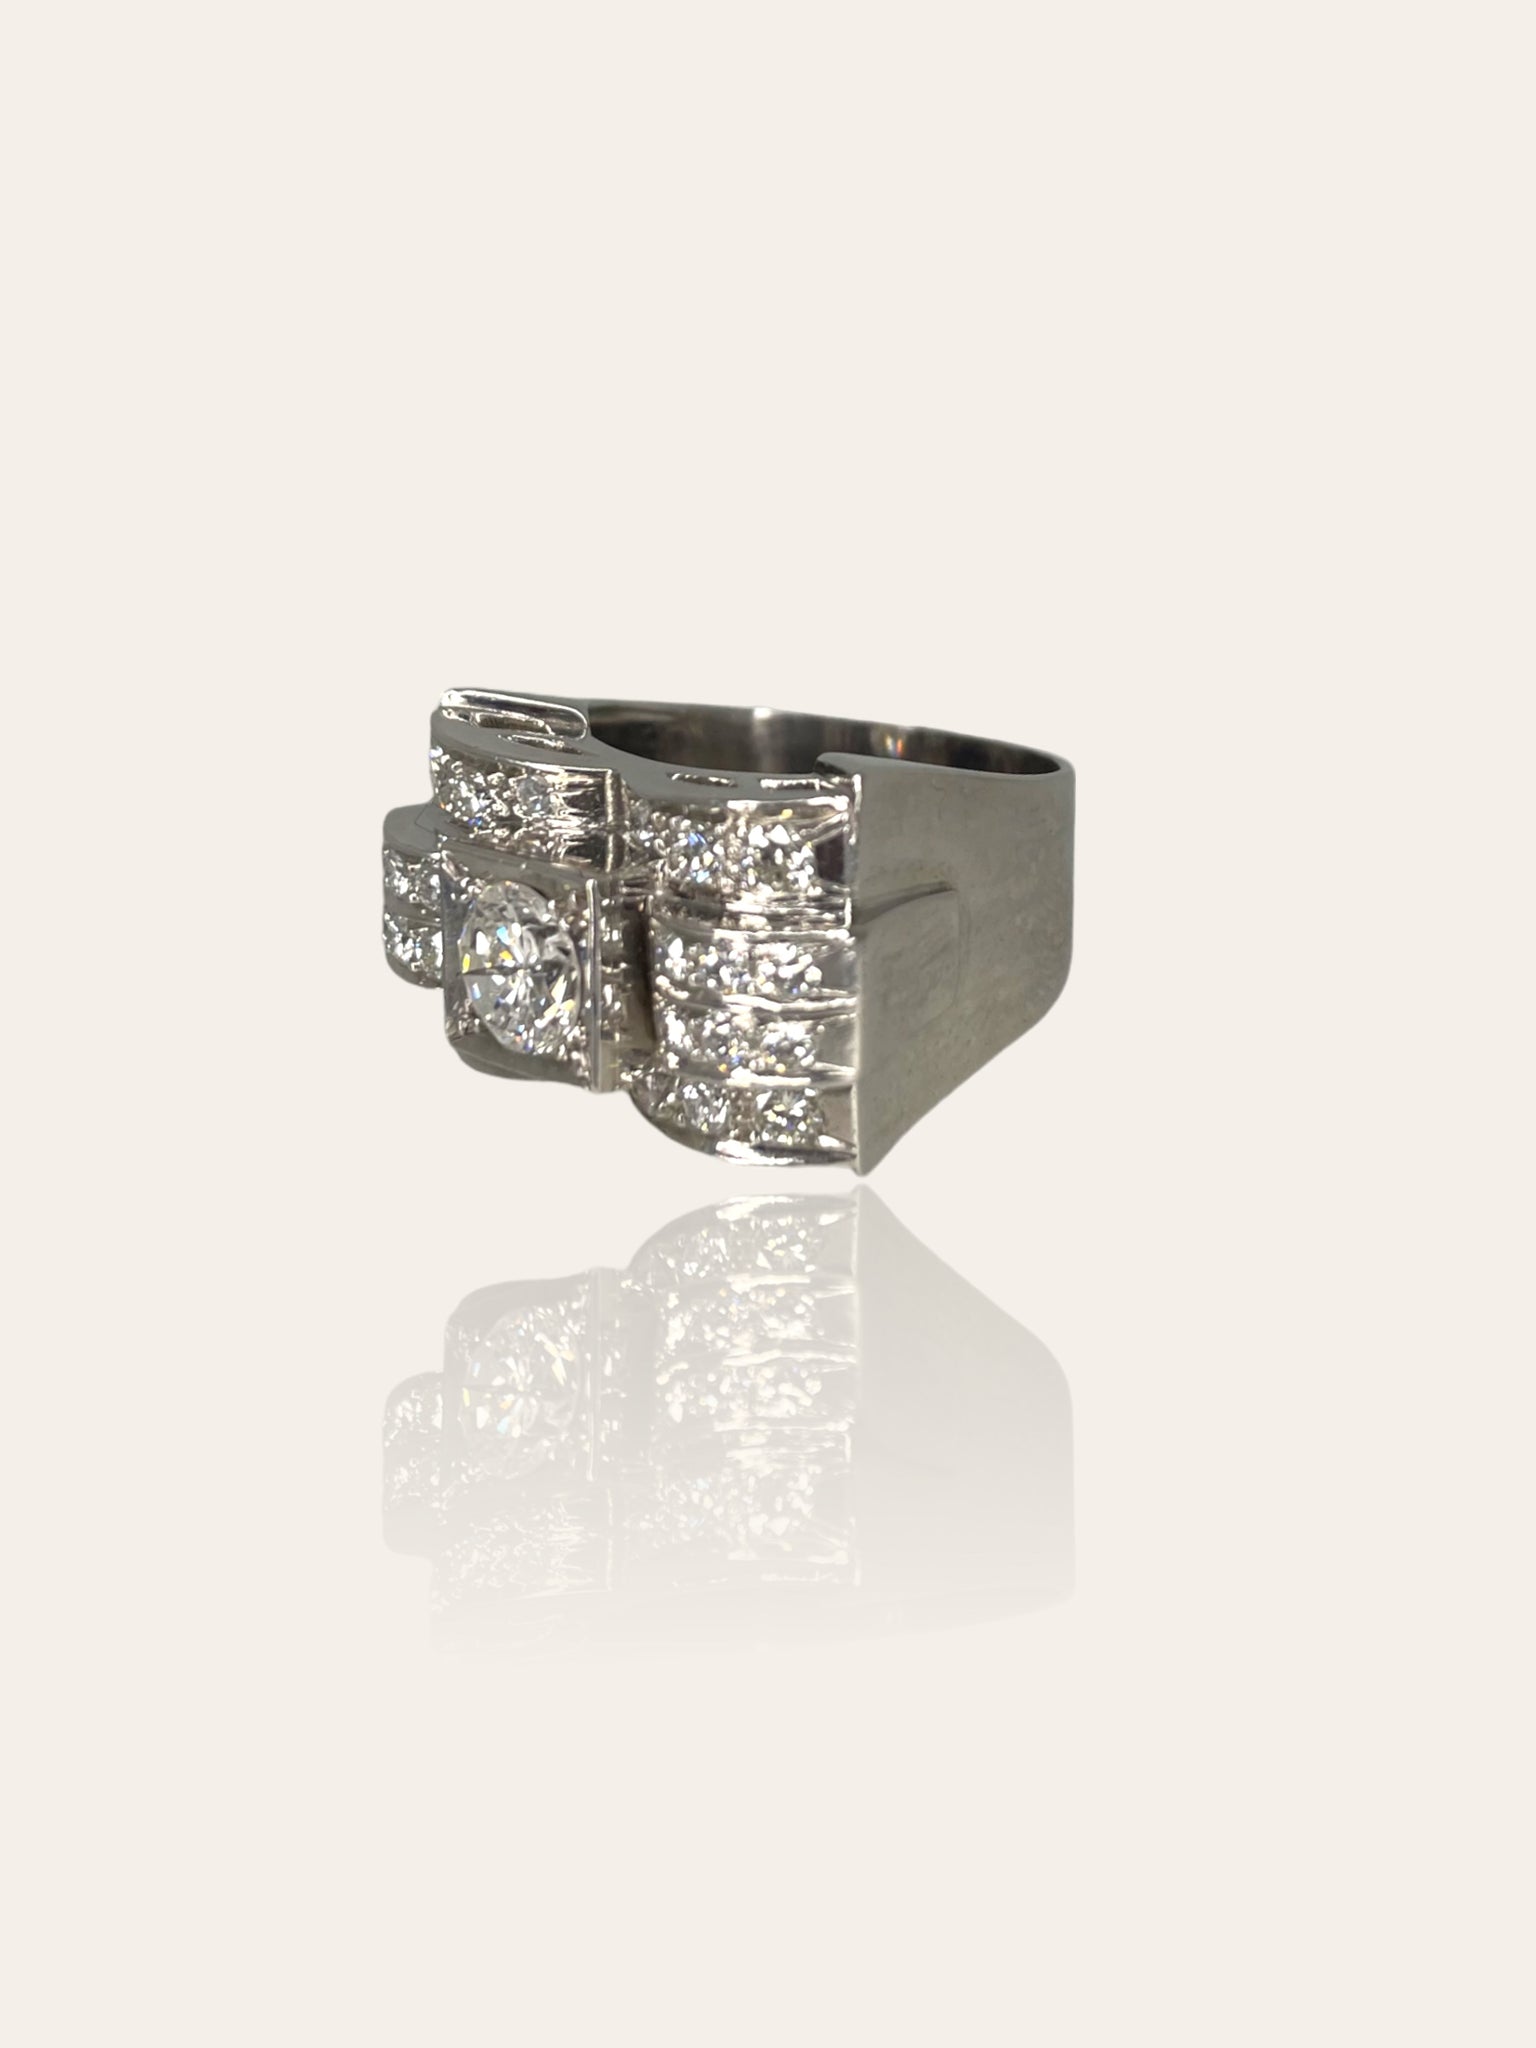 14K white gold fantasy ring set with brilliant cut diamonds